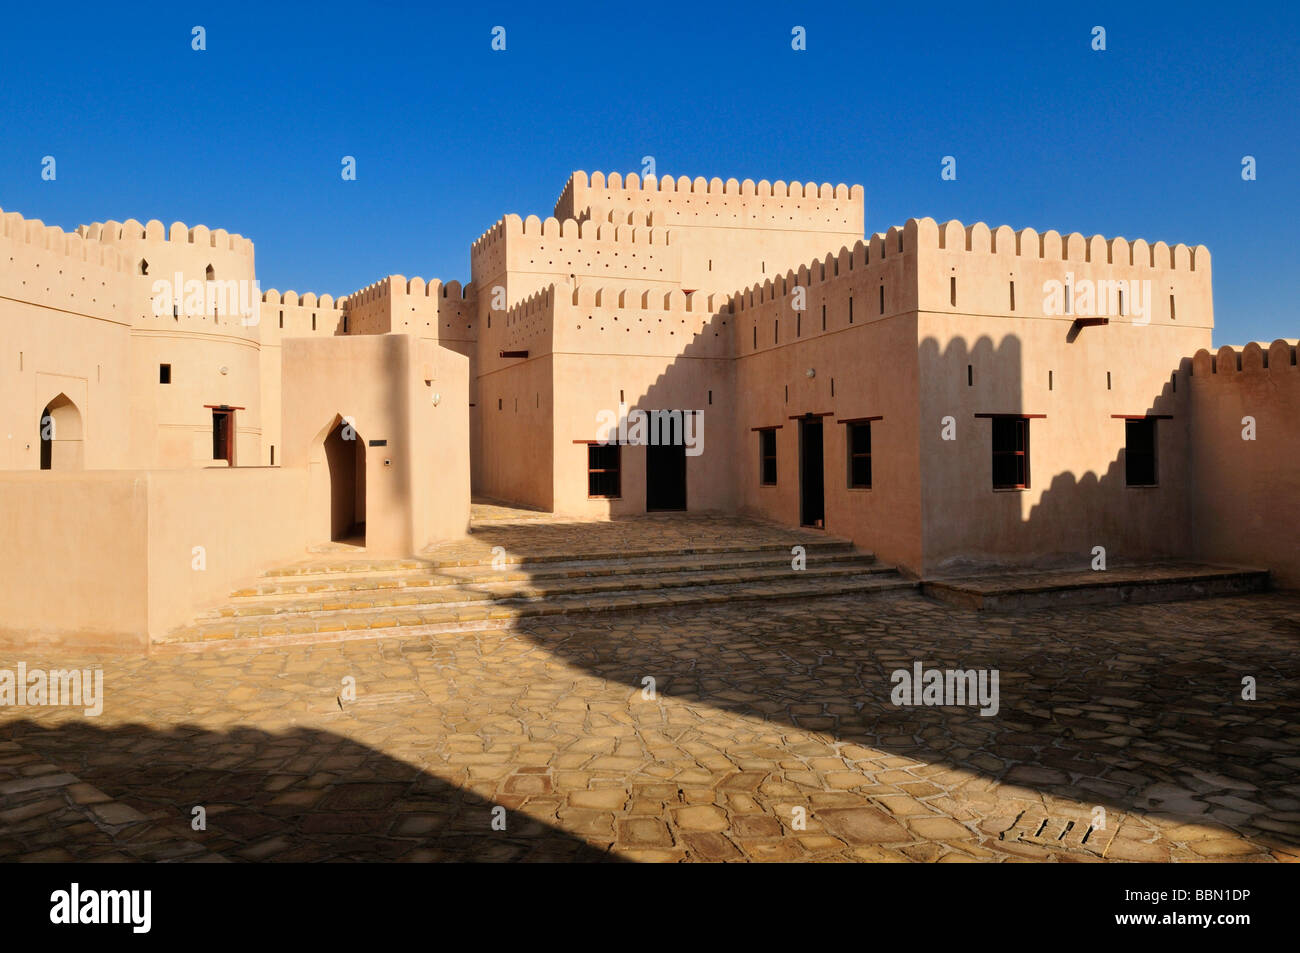 Historic adobe fortification, Jaalan Bani Bu Hasan Fort or Castle, Sharqiya Region, Sultanate of Oman, Arabia, Middle East Stock Photo